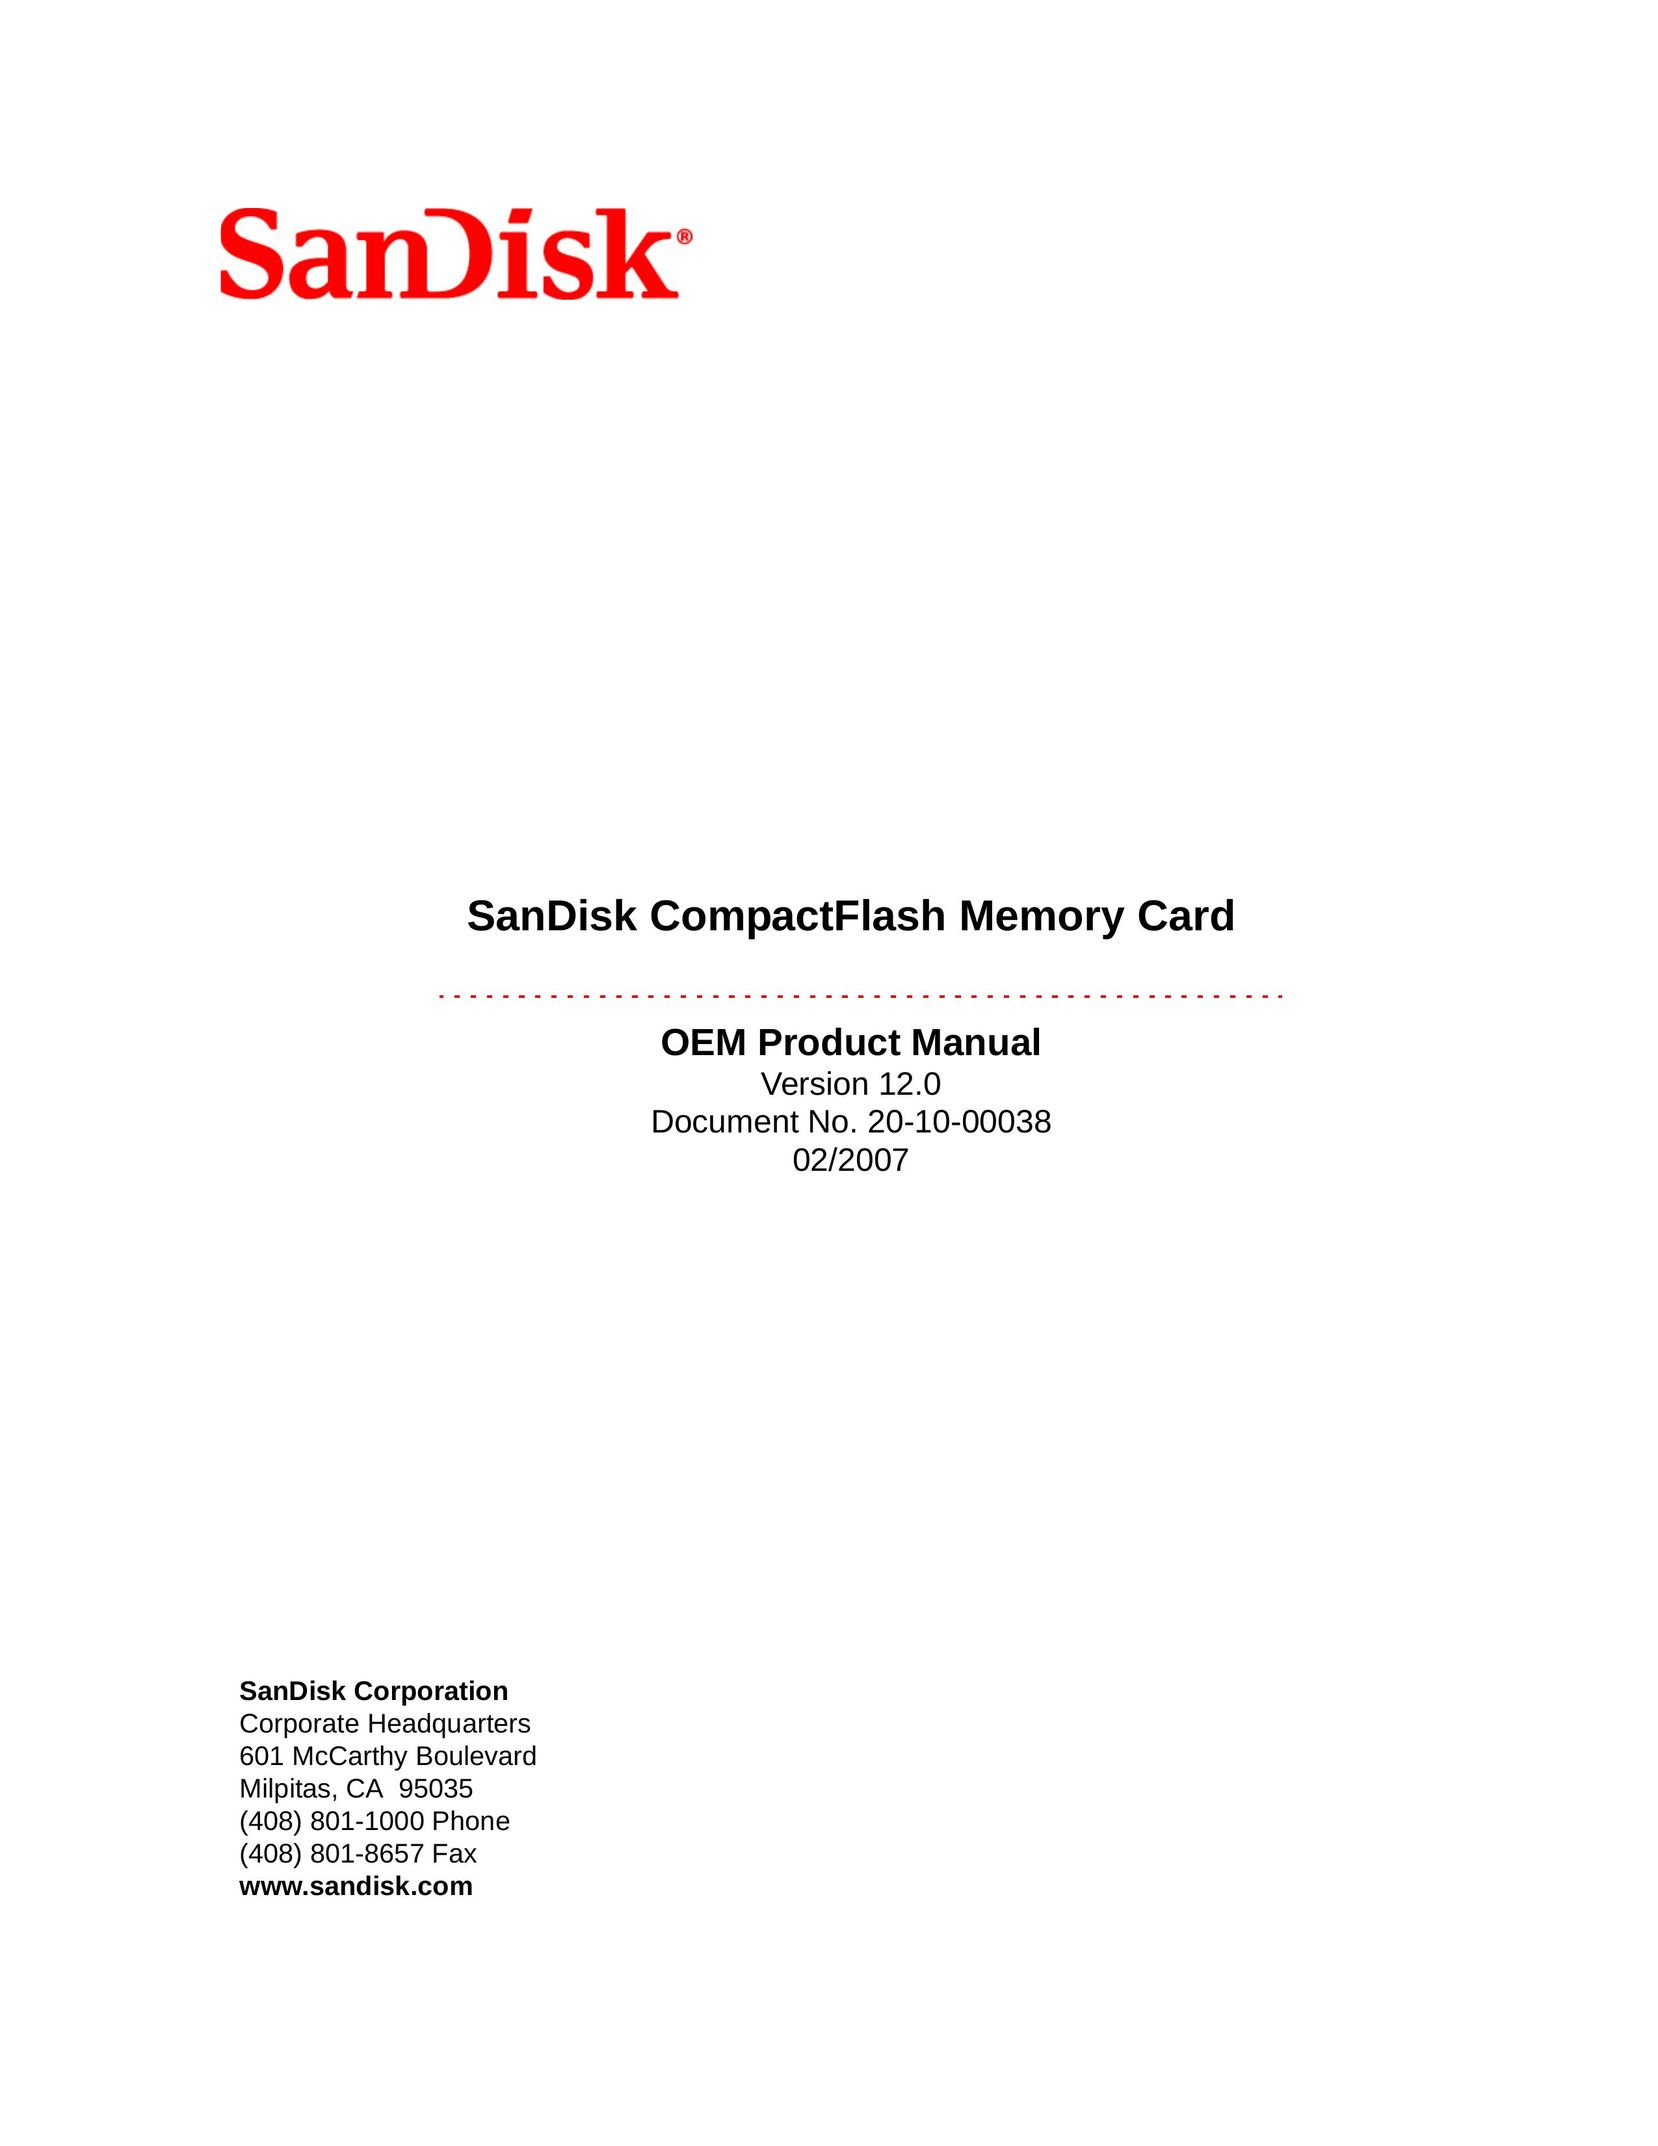 SanDisk 20-10-00038 Computer Drive User Manual